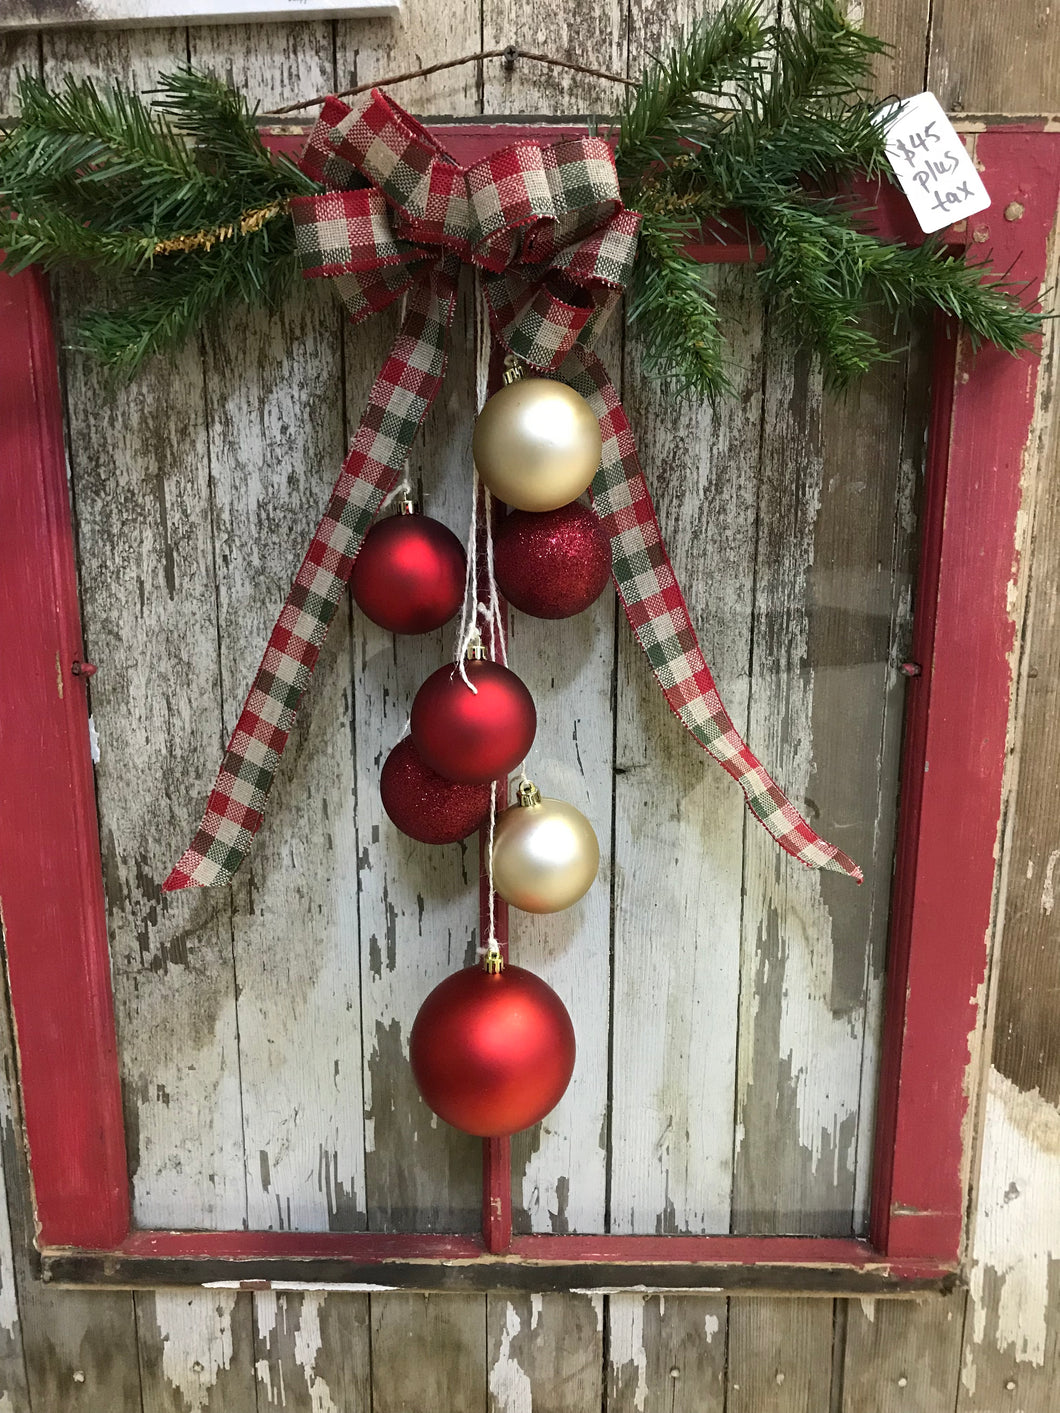 Antique window sash - Christmas